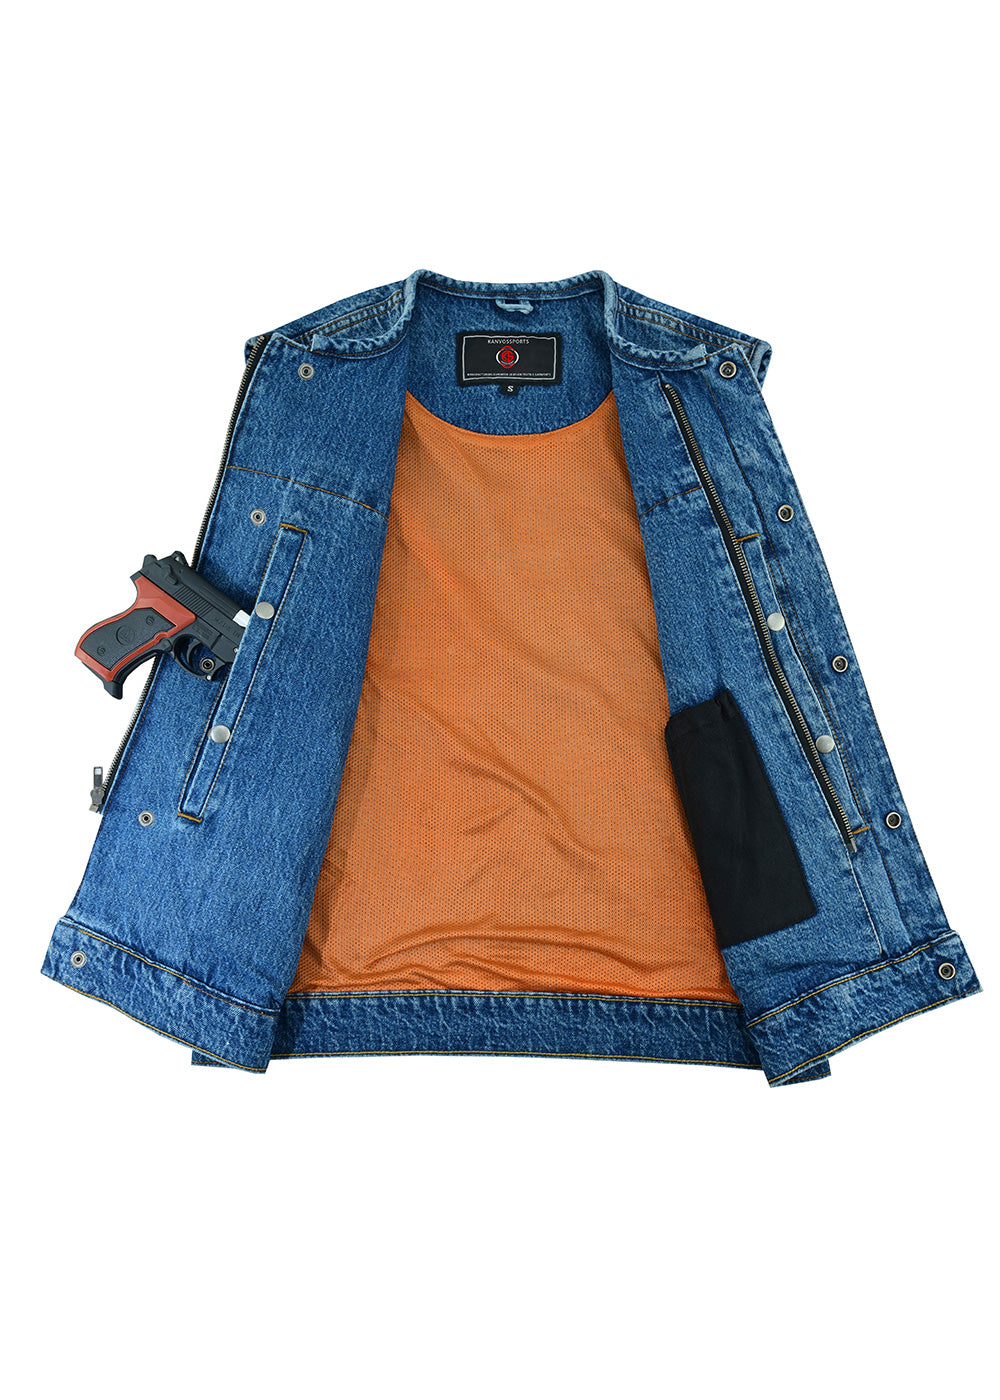 Men's Denim Leather Vest-1